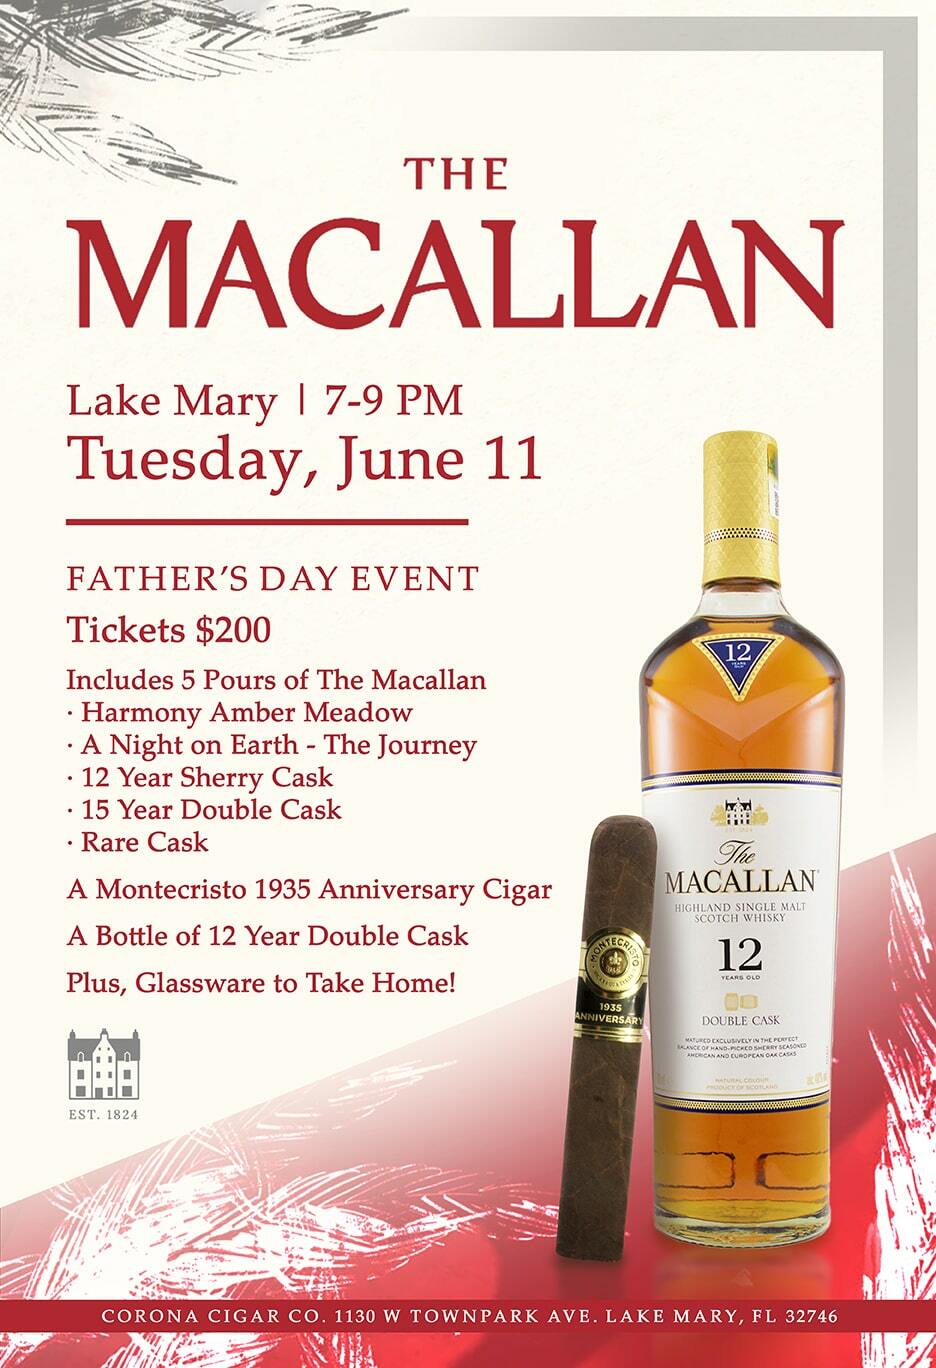 The Macallan Tasting Event - Lake Mary/Heathrow